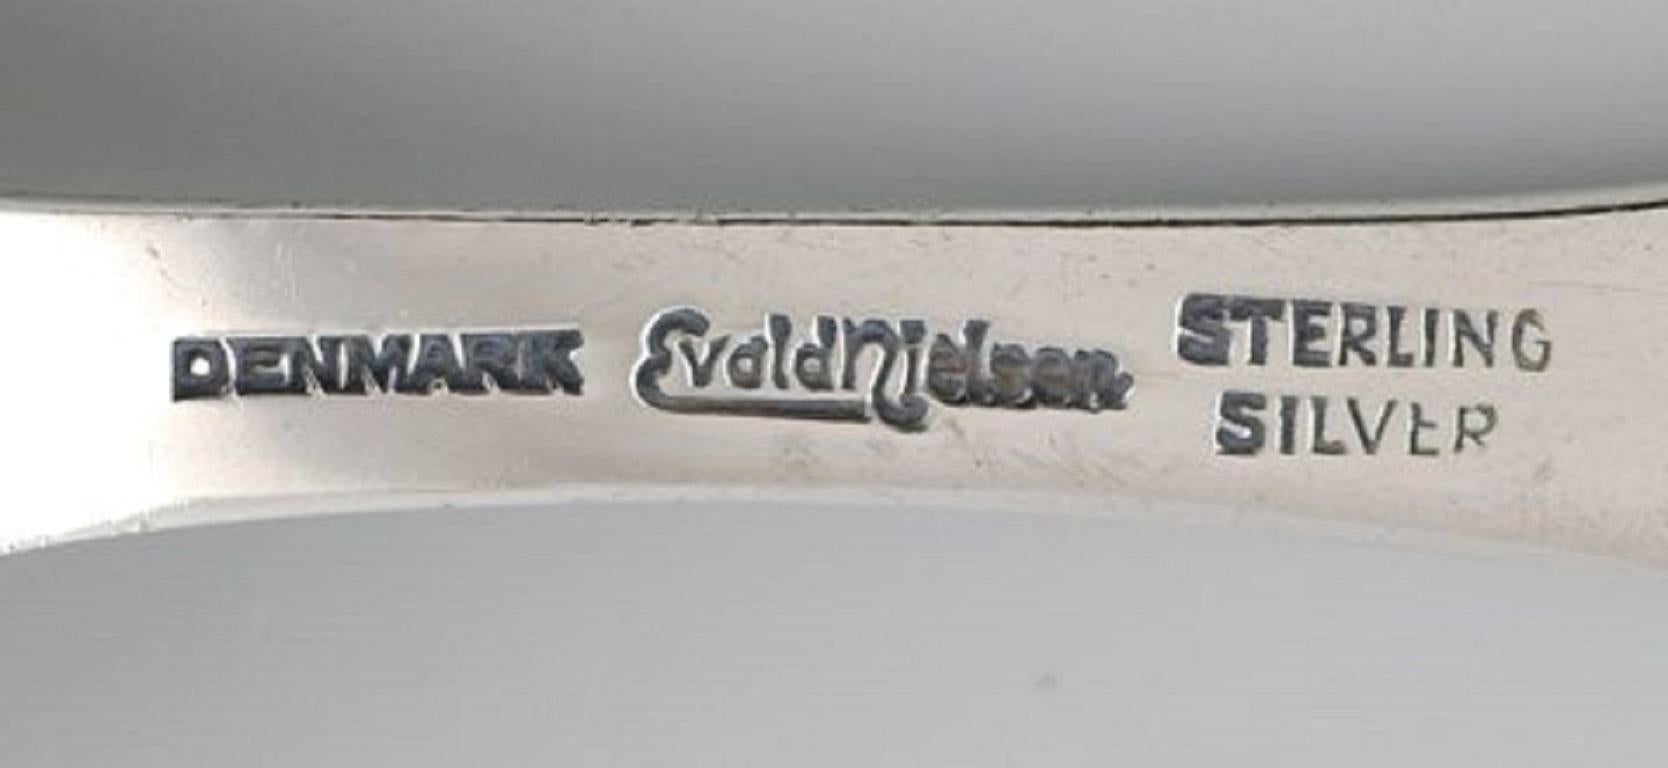 Danish Evald Nielsen Jam Spoon in Sterling Silver, 1920s For Sale